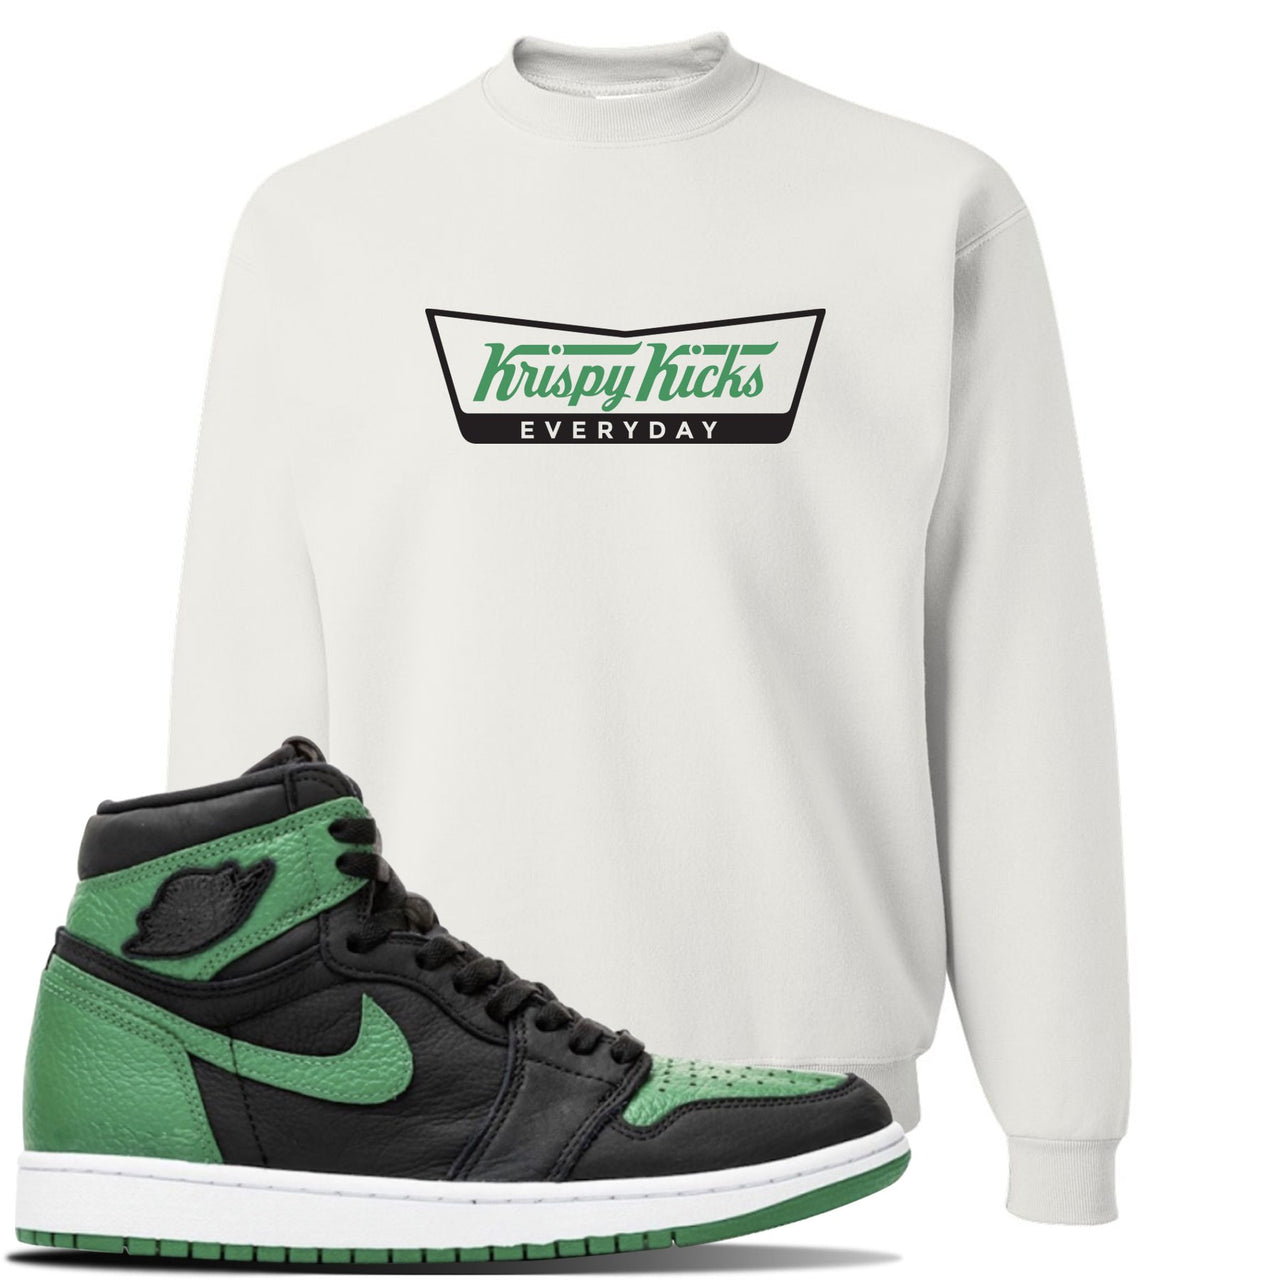 Jordan 1 Retro High OG Pine Green Gym Sneaker White Crewneck Sweatshirt | Crewneck to match Air Jordan 1 Retro High OG Pine Green Gym Shoes | Krispy Kicks